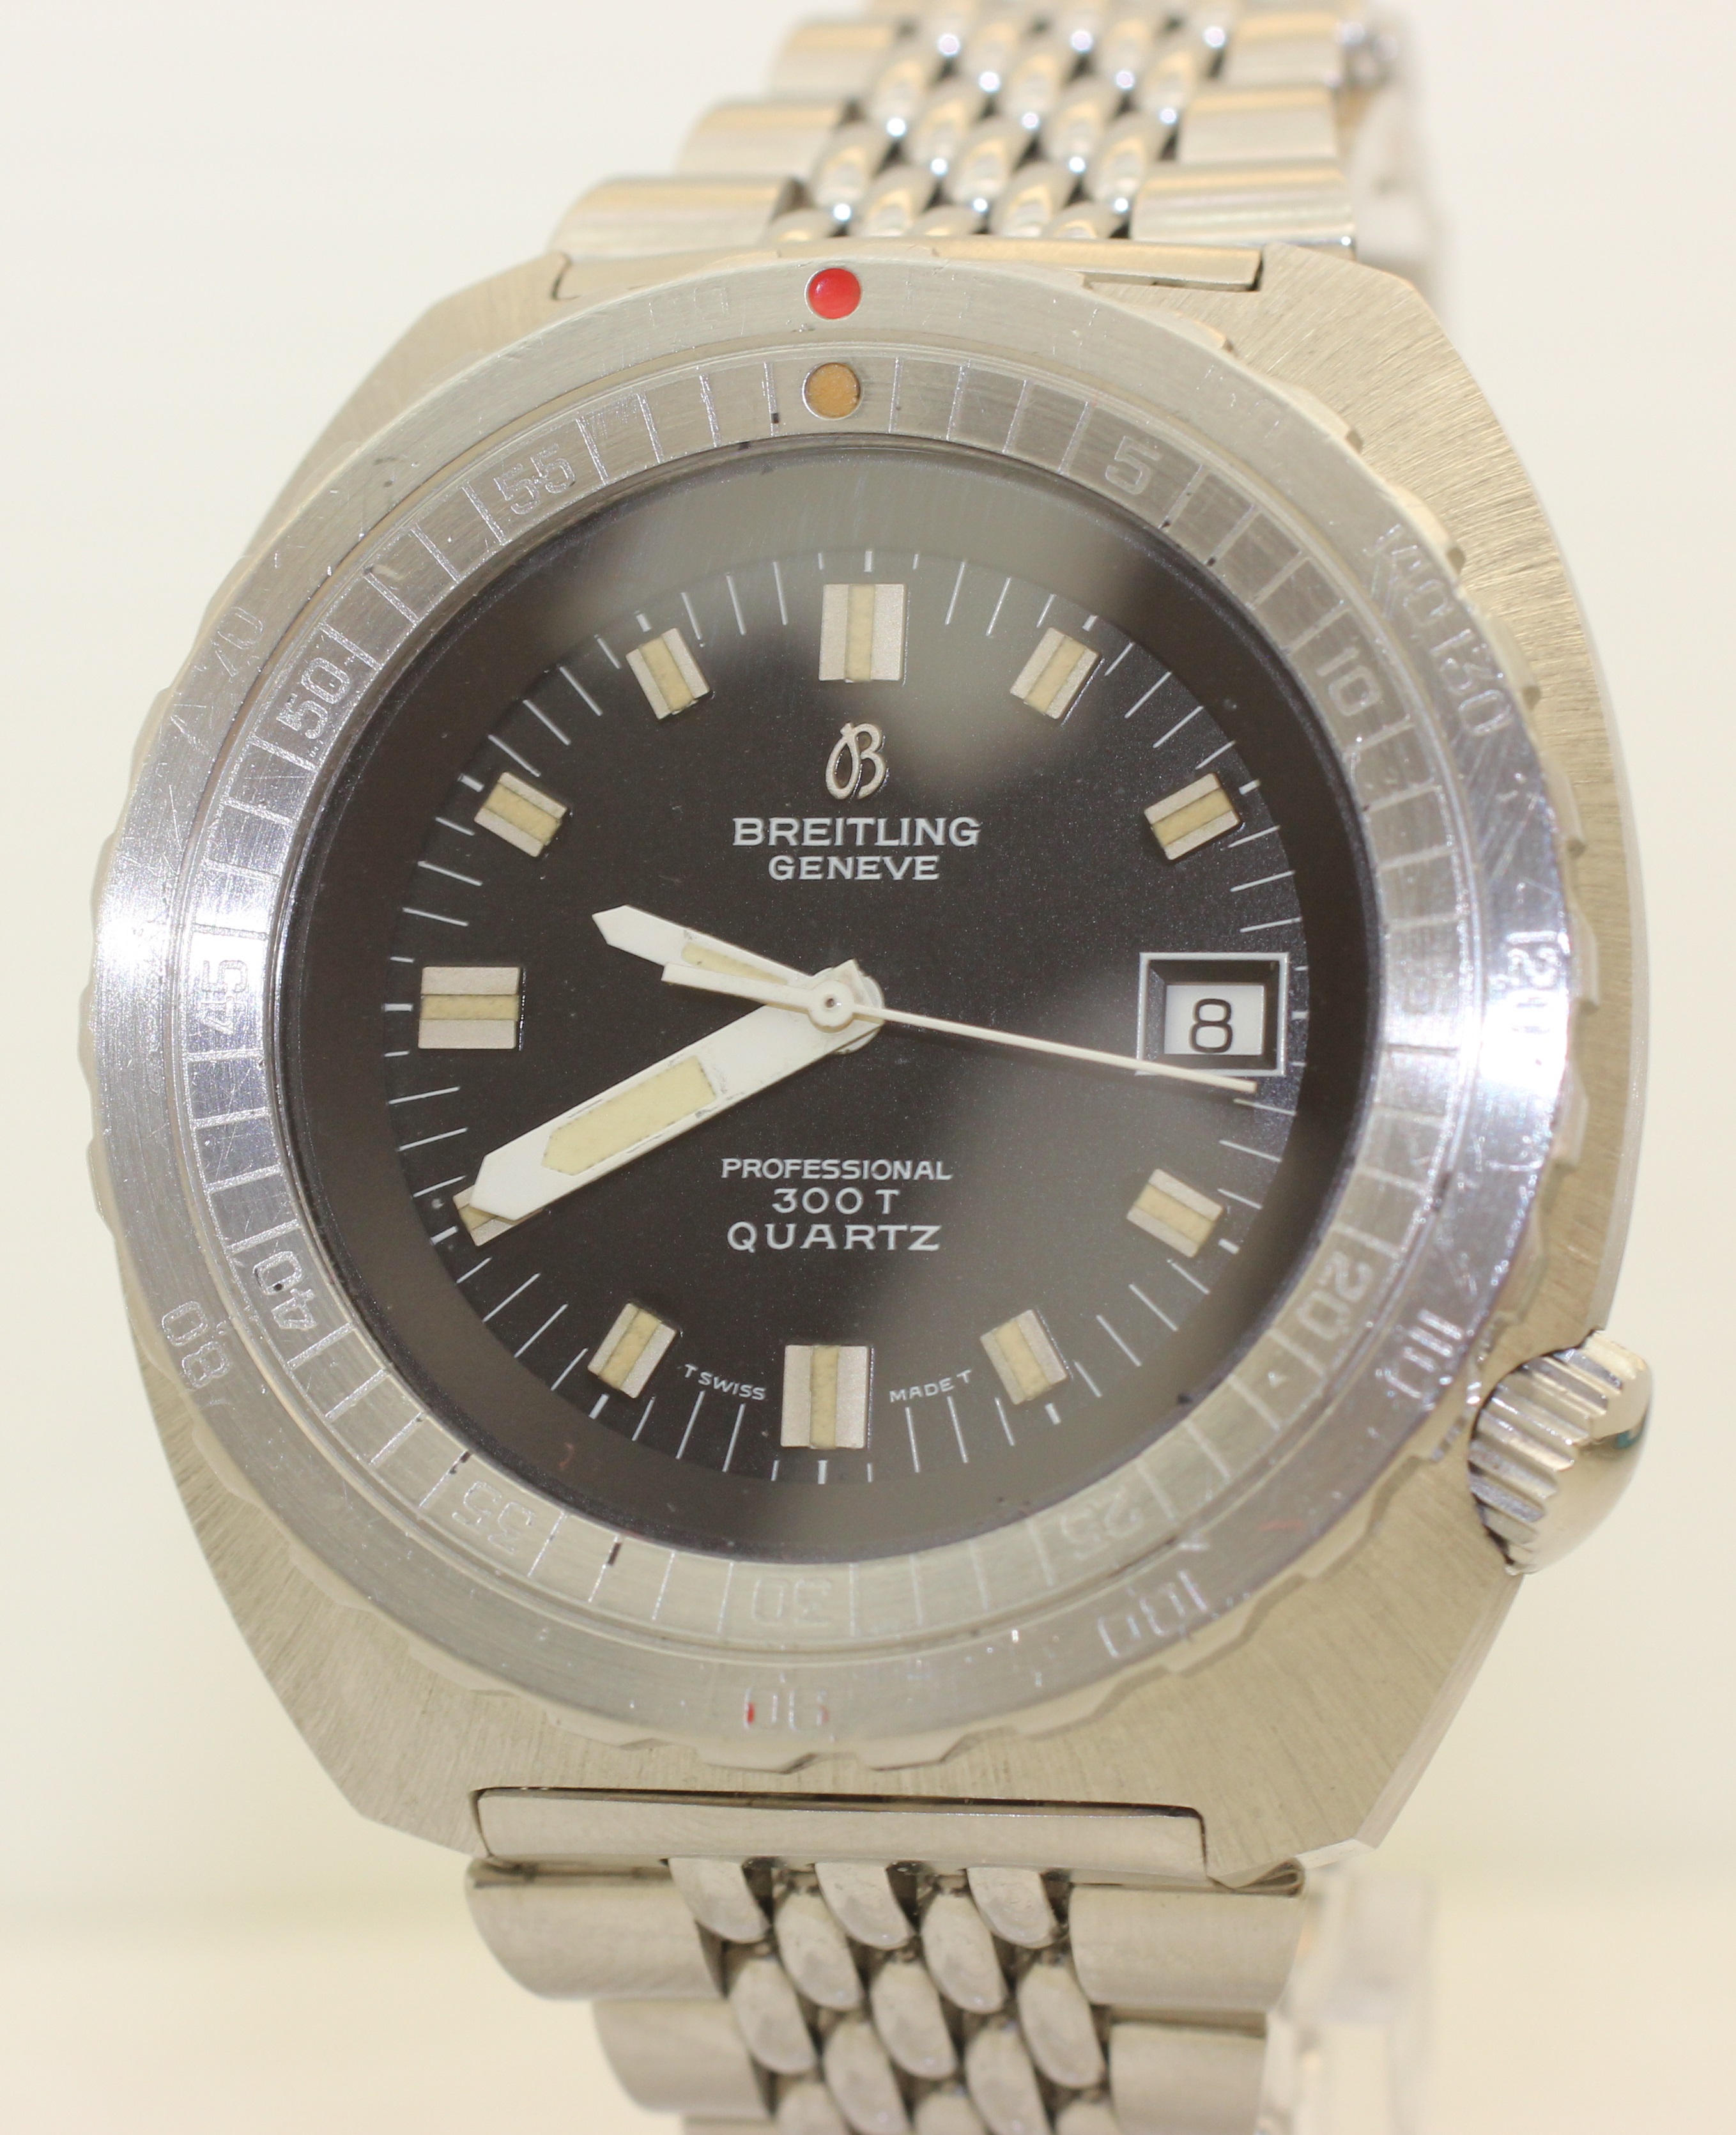 Vintage 1984 Breitling Professional Quartz 300T Divers Watch - 83110 Doxa